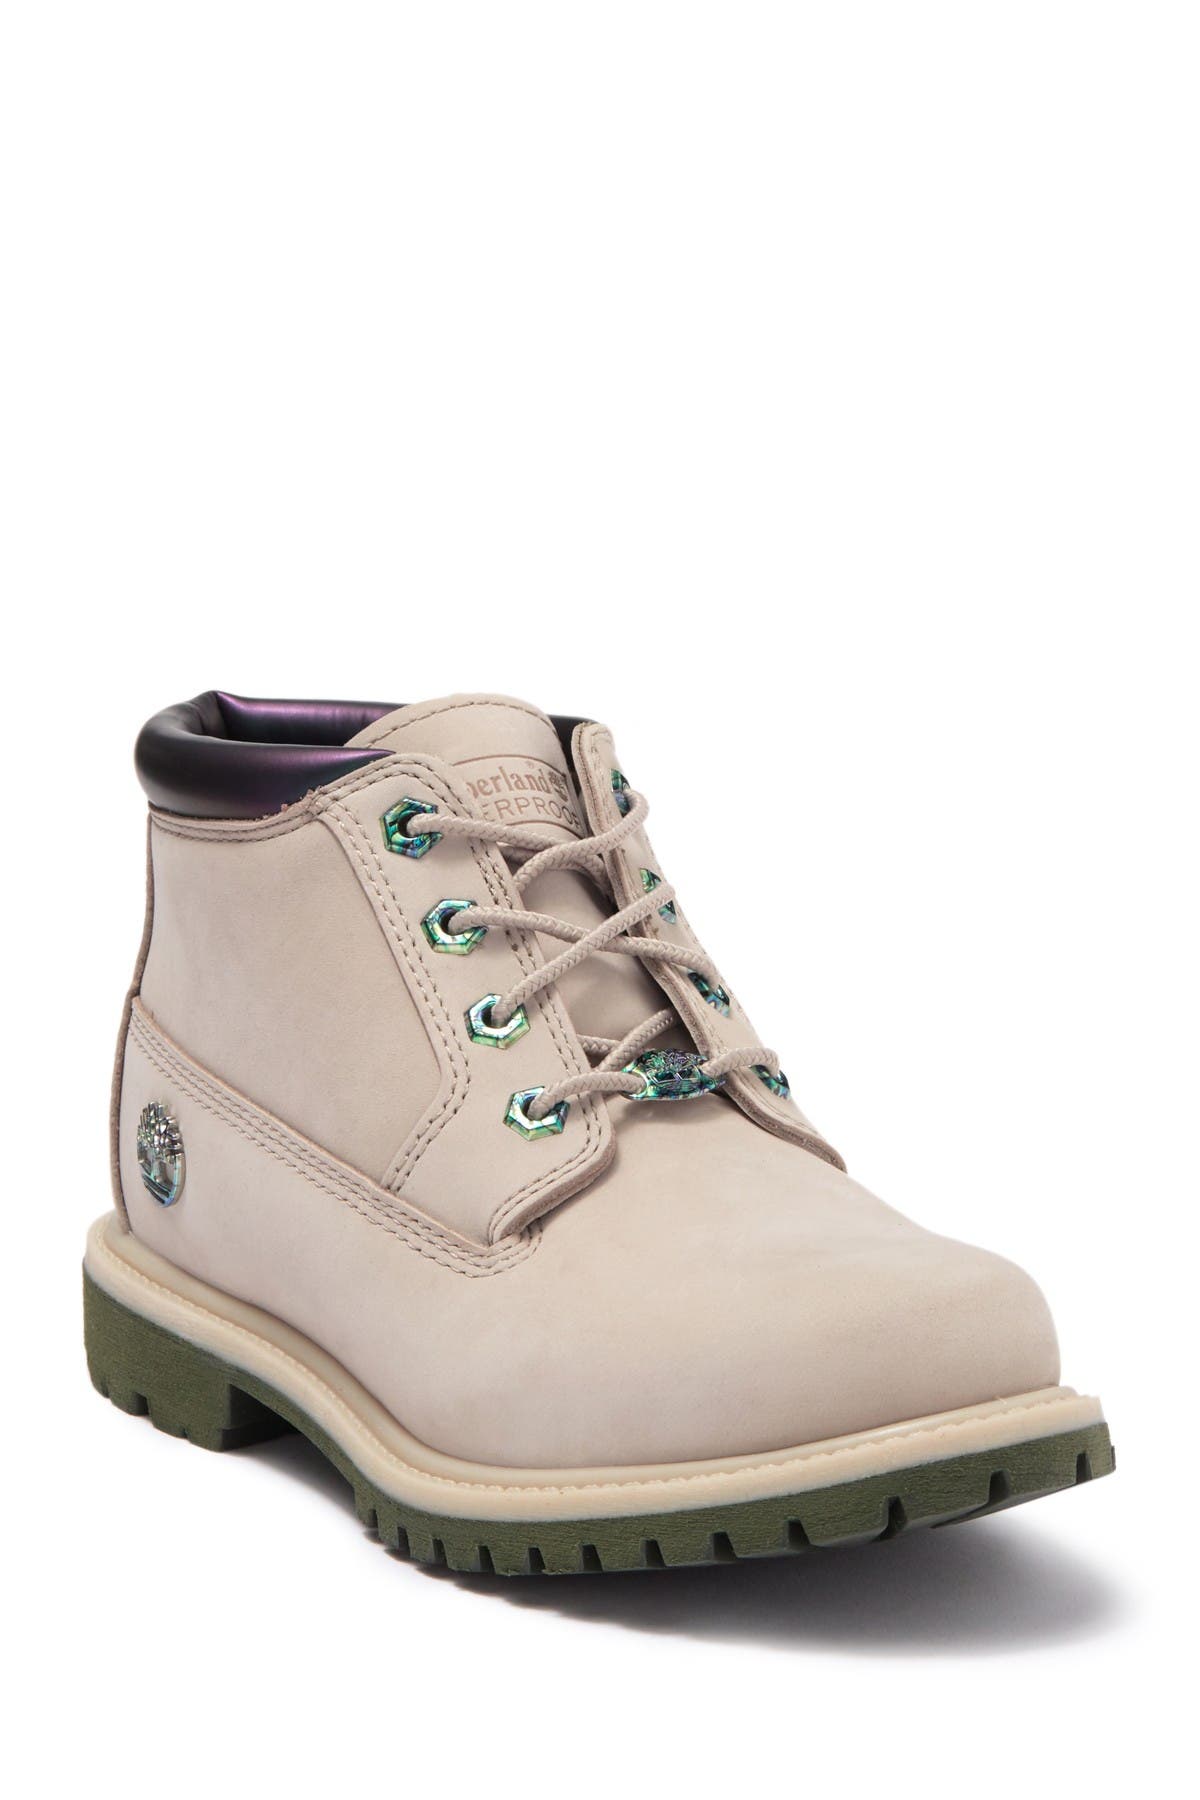 timberland nellie chukka double waterproof boots